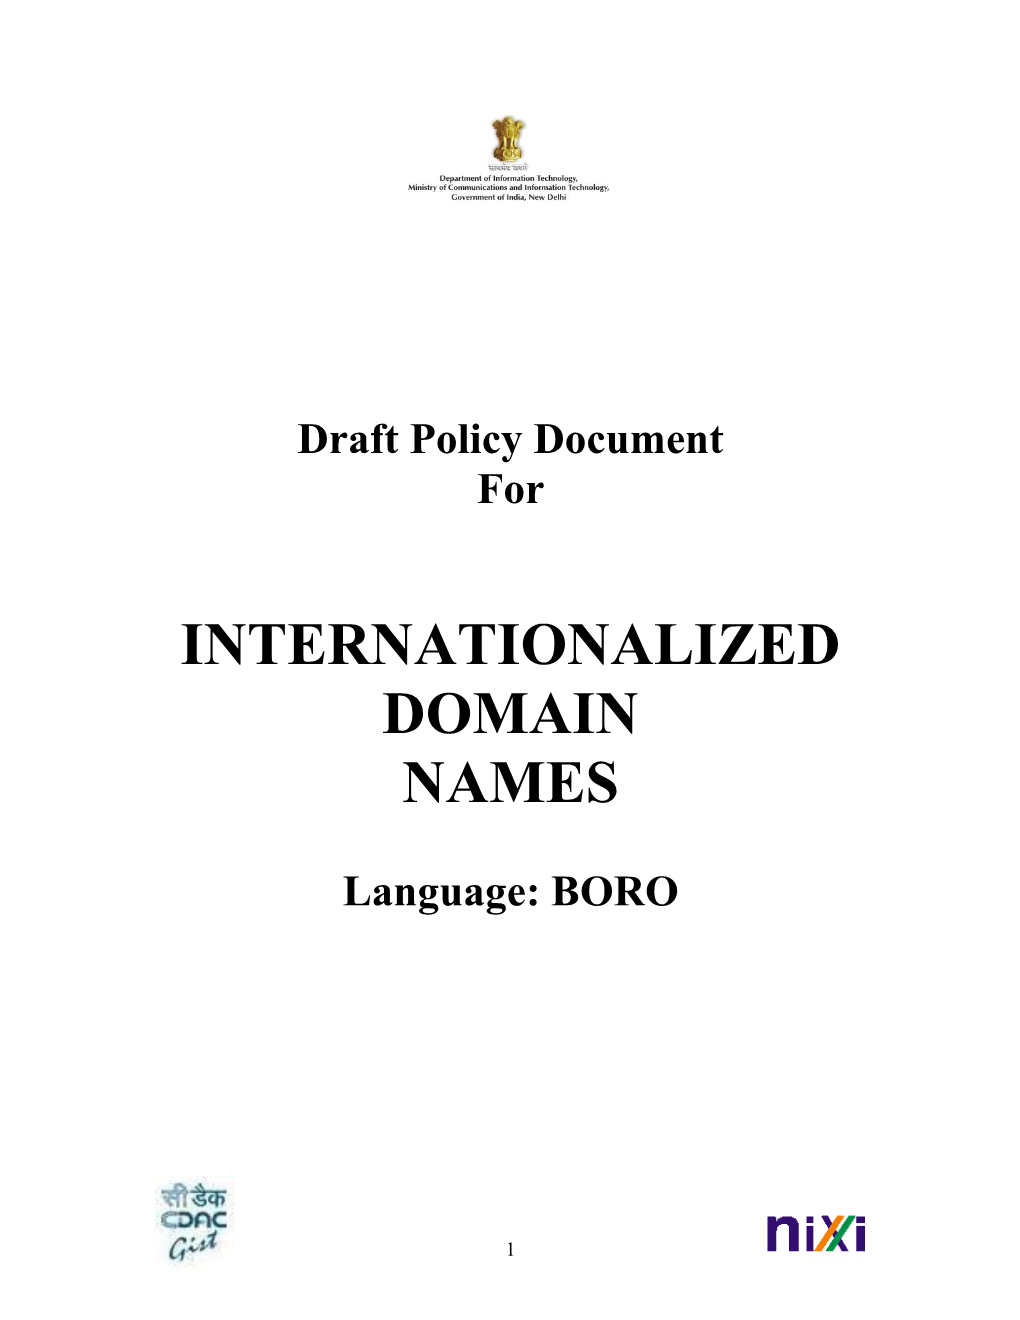 Internationalized Domain Names-Boro